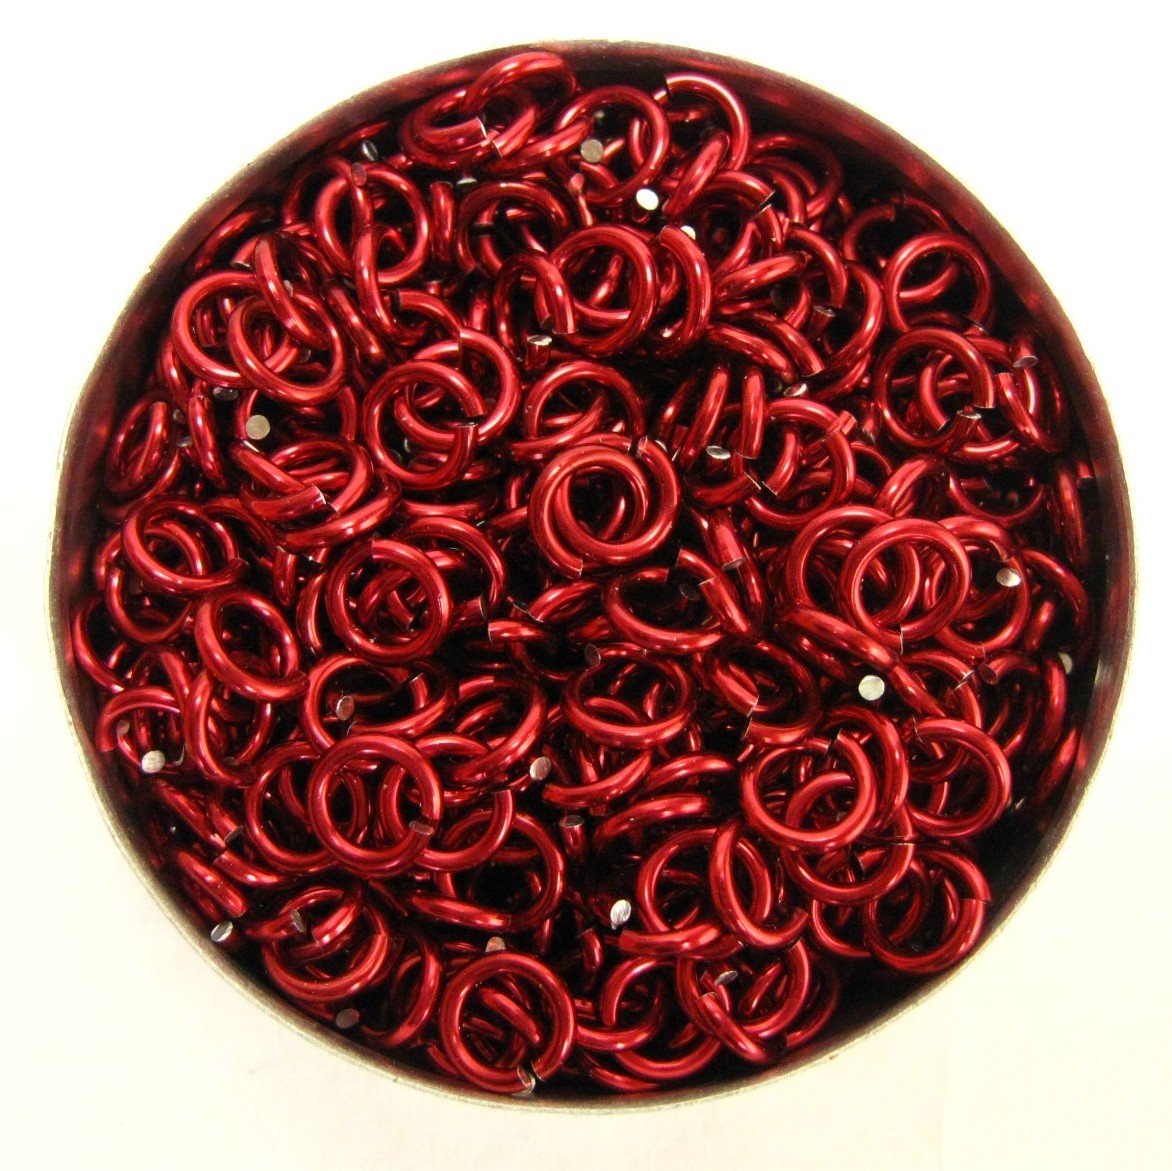 Glanzend rood aluminium, 1,2x4,1 mm